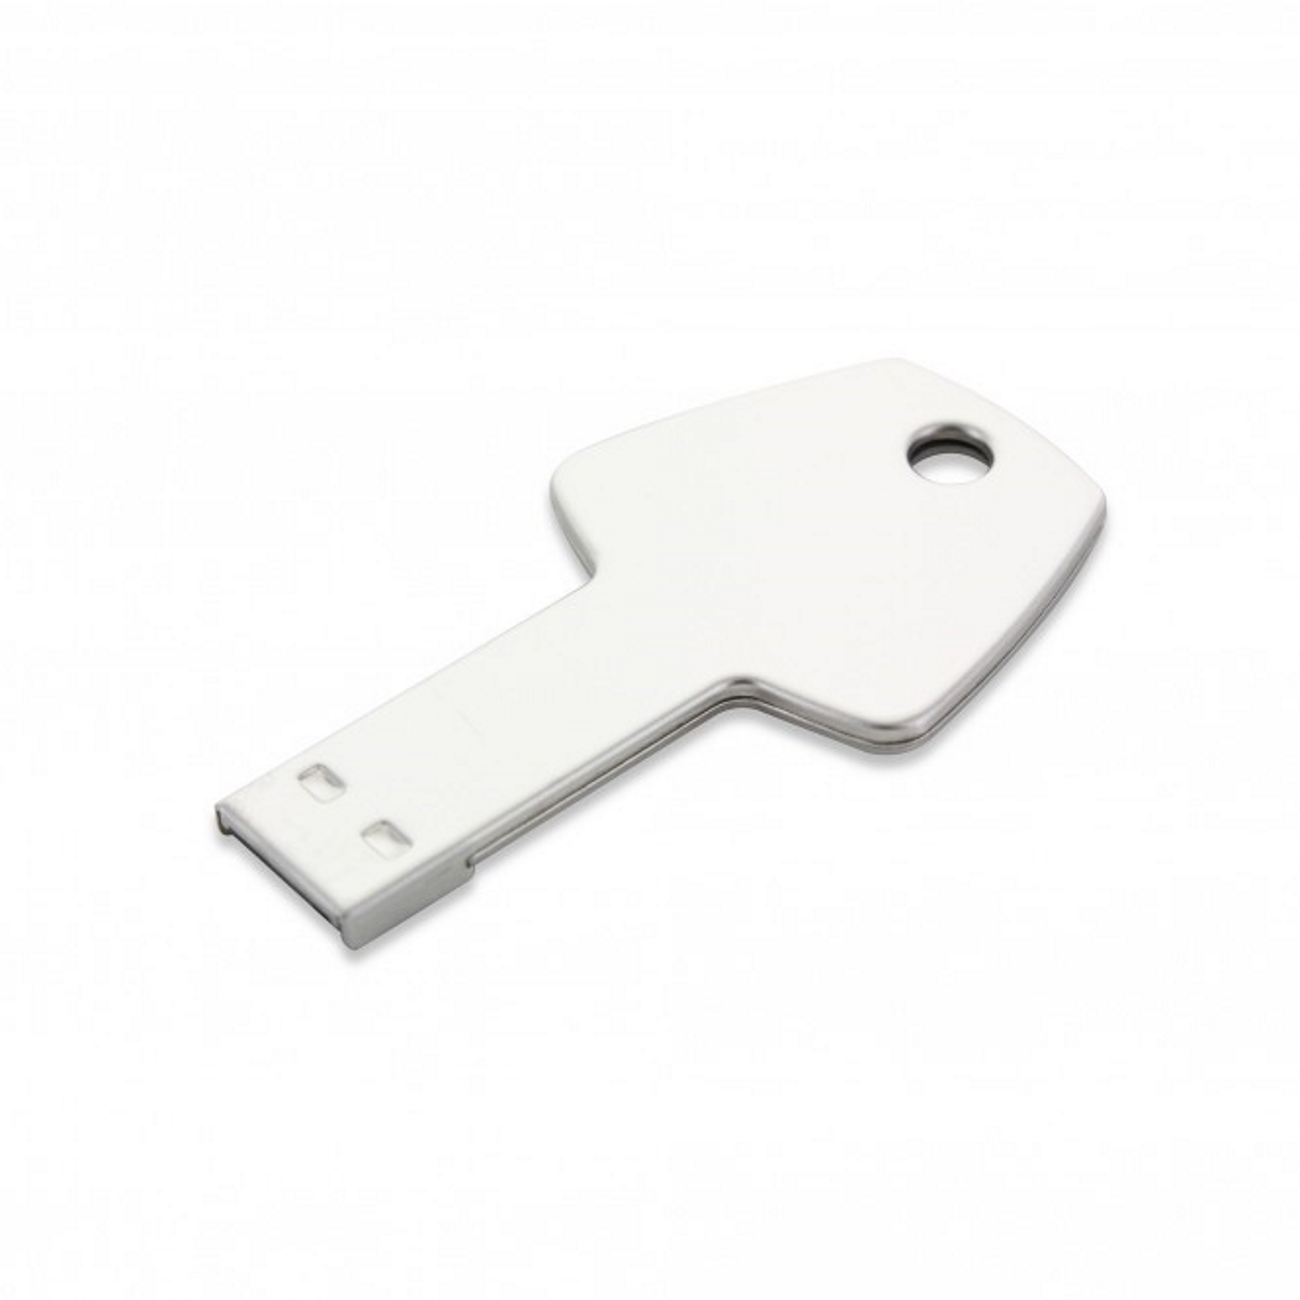 USB GERMANY ®Schlüssel Key USB-Stick GB) (Silber, 4